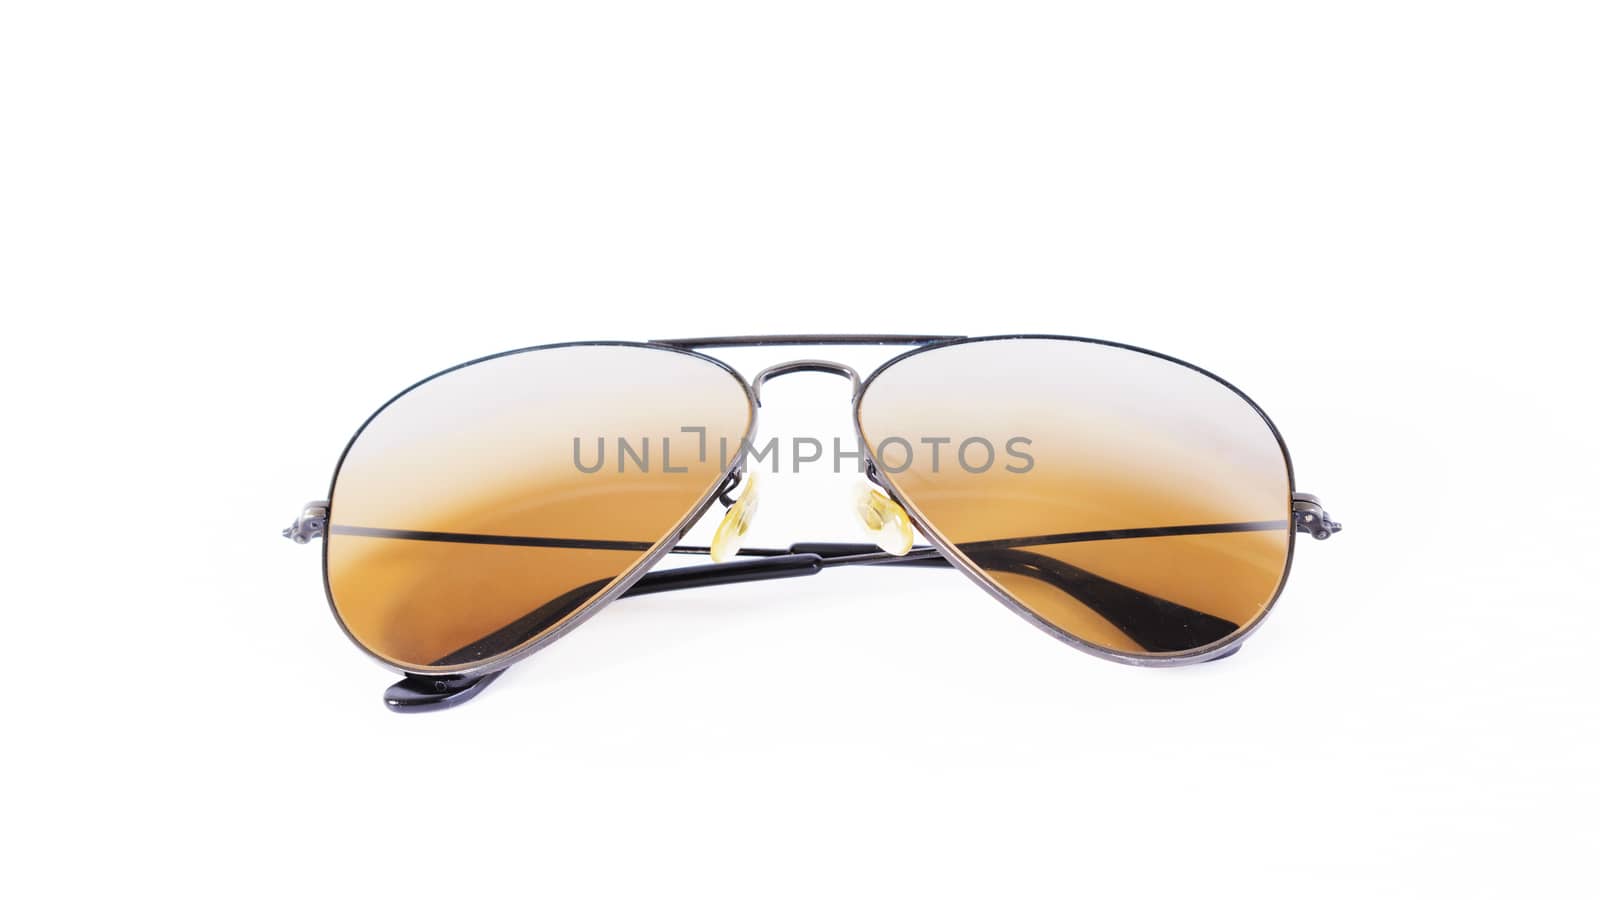 Sunglasses Isolated on white background